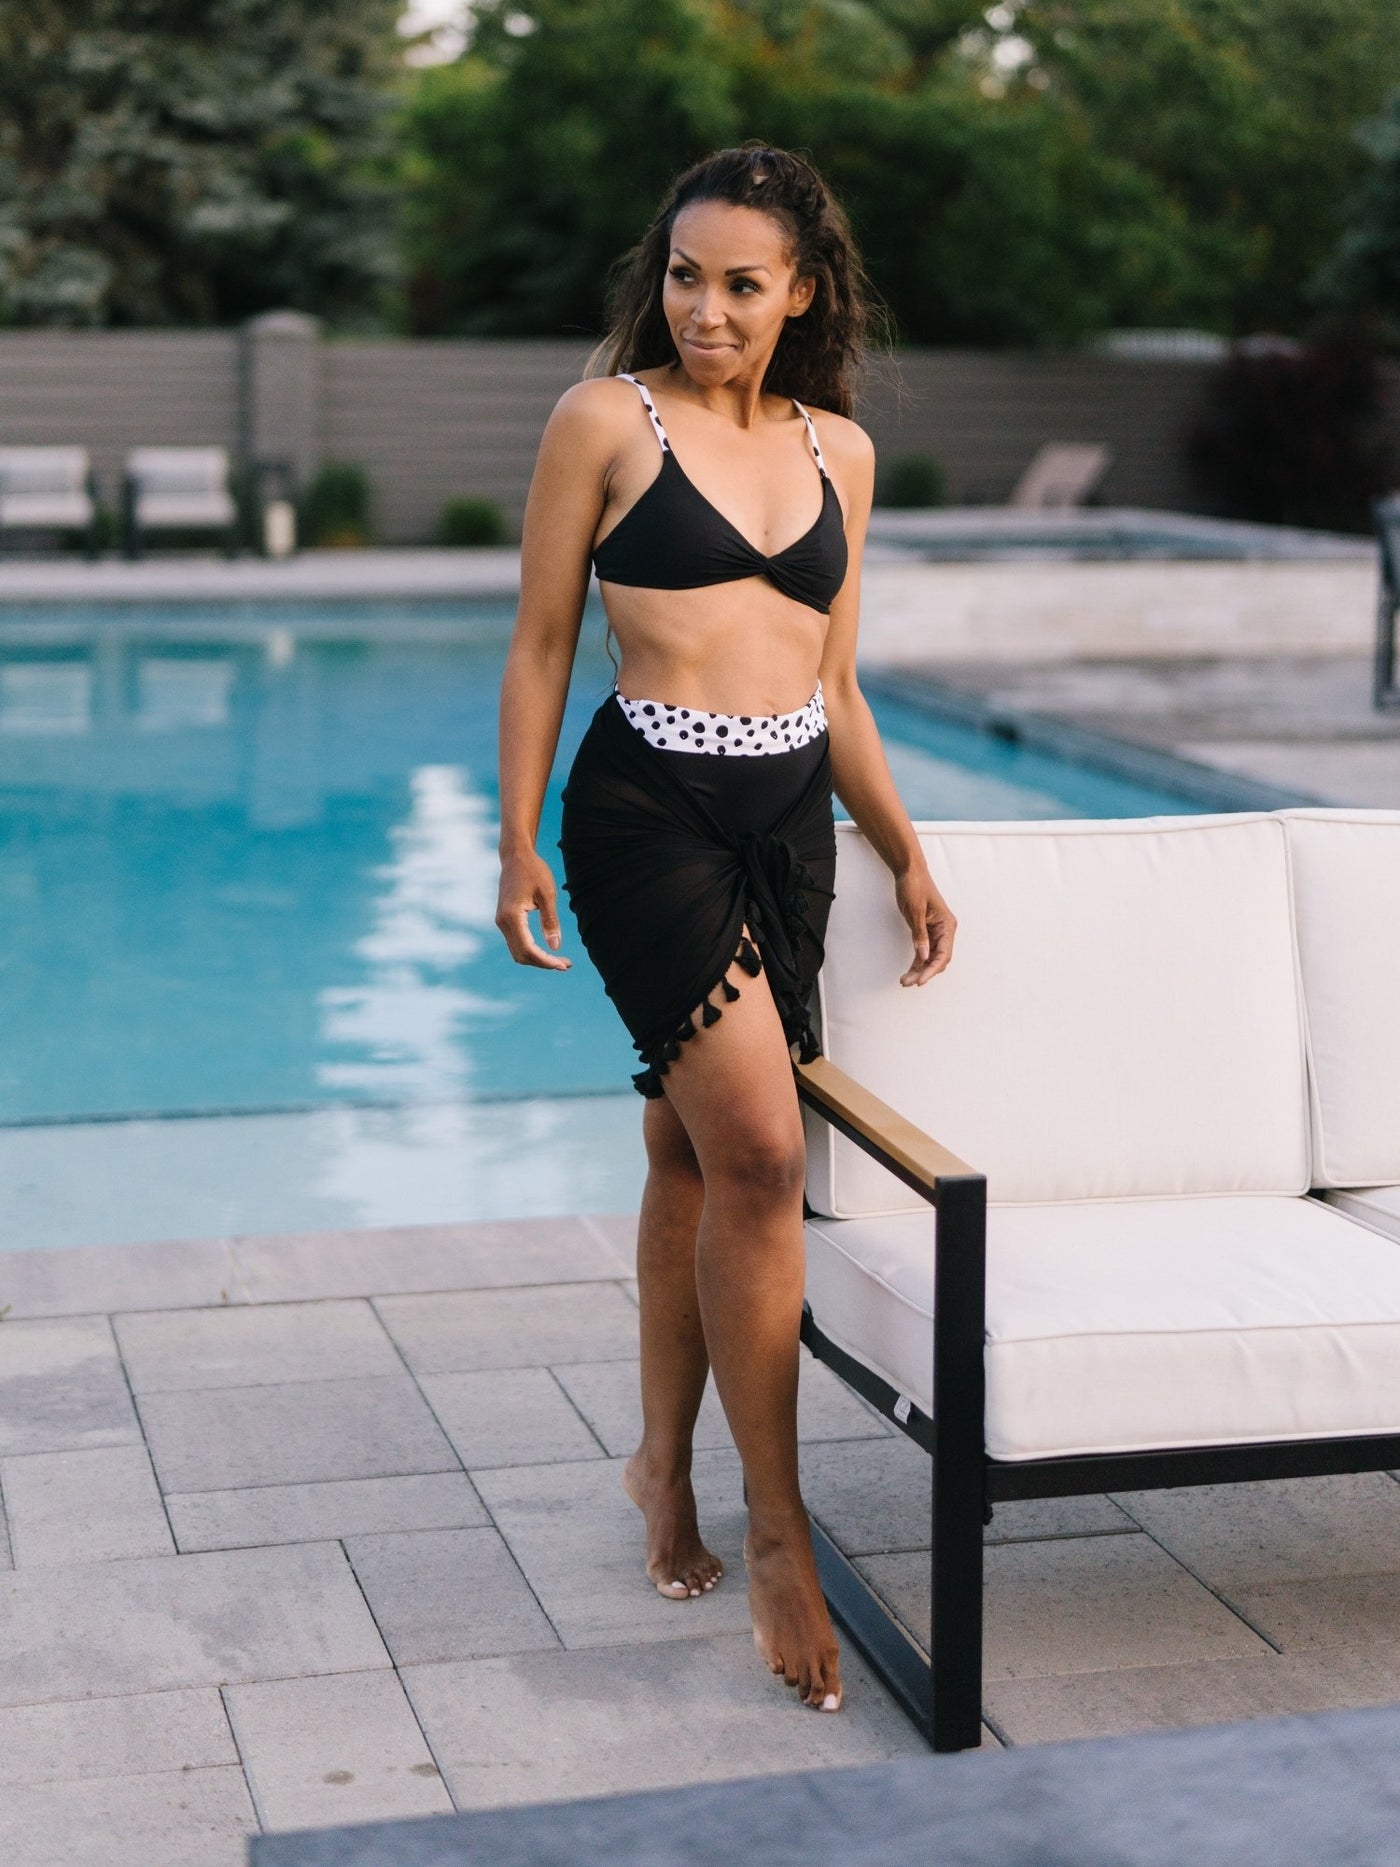 Navalora Matching Swimsuits Women's Dalmatians on Vacation Black and White Twist String Bikini Top